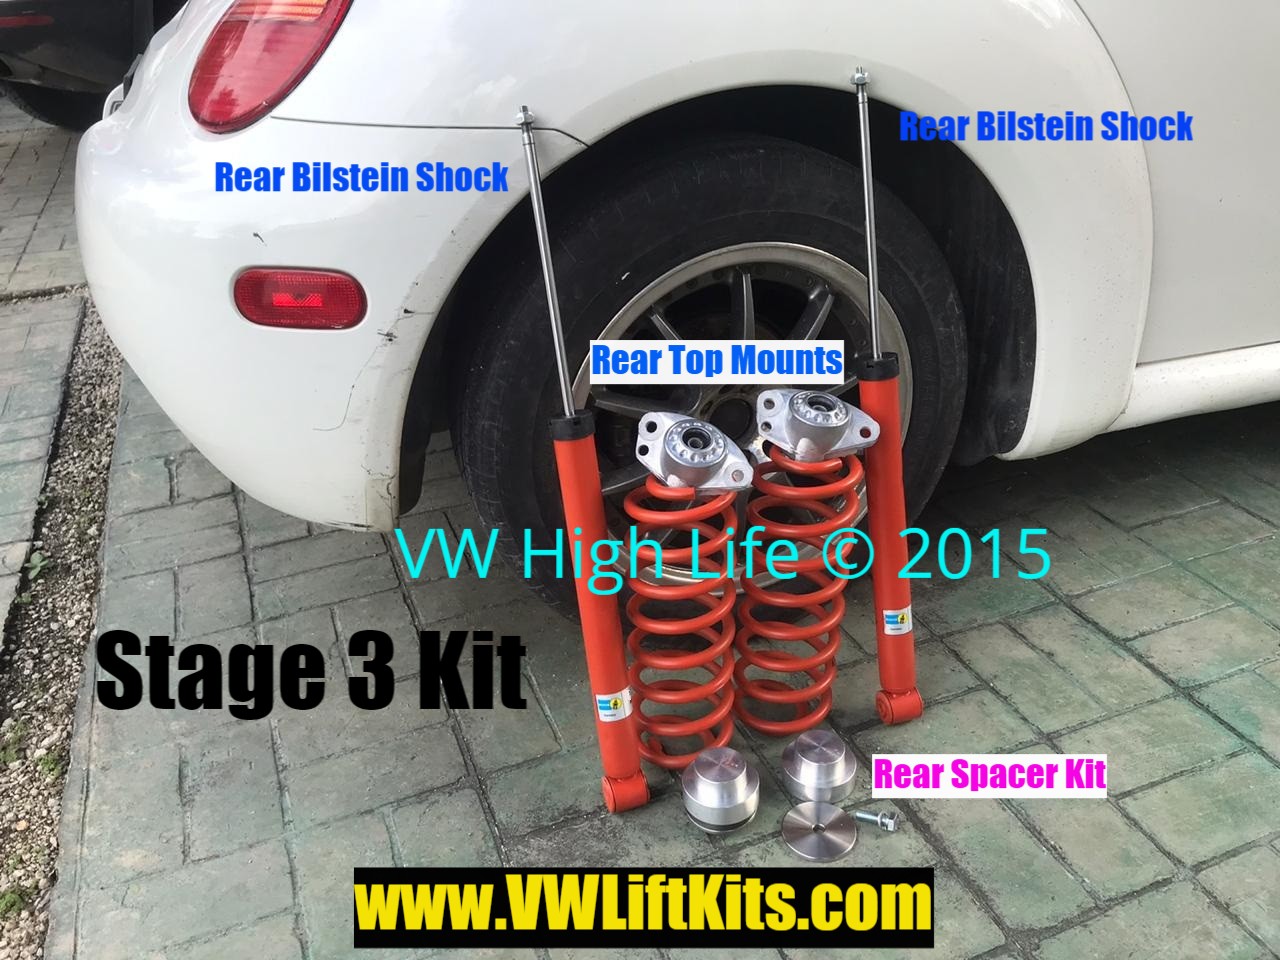 Stage 3 Kit - 1999 VW New Beetle aka "The Aloosh"